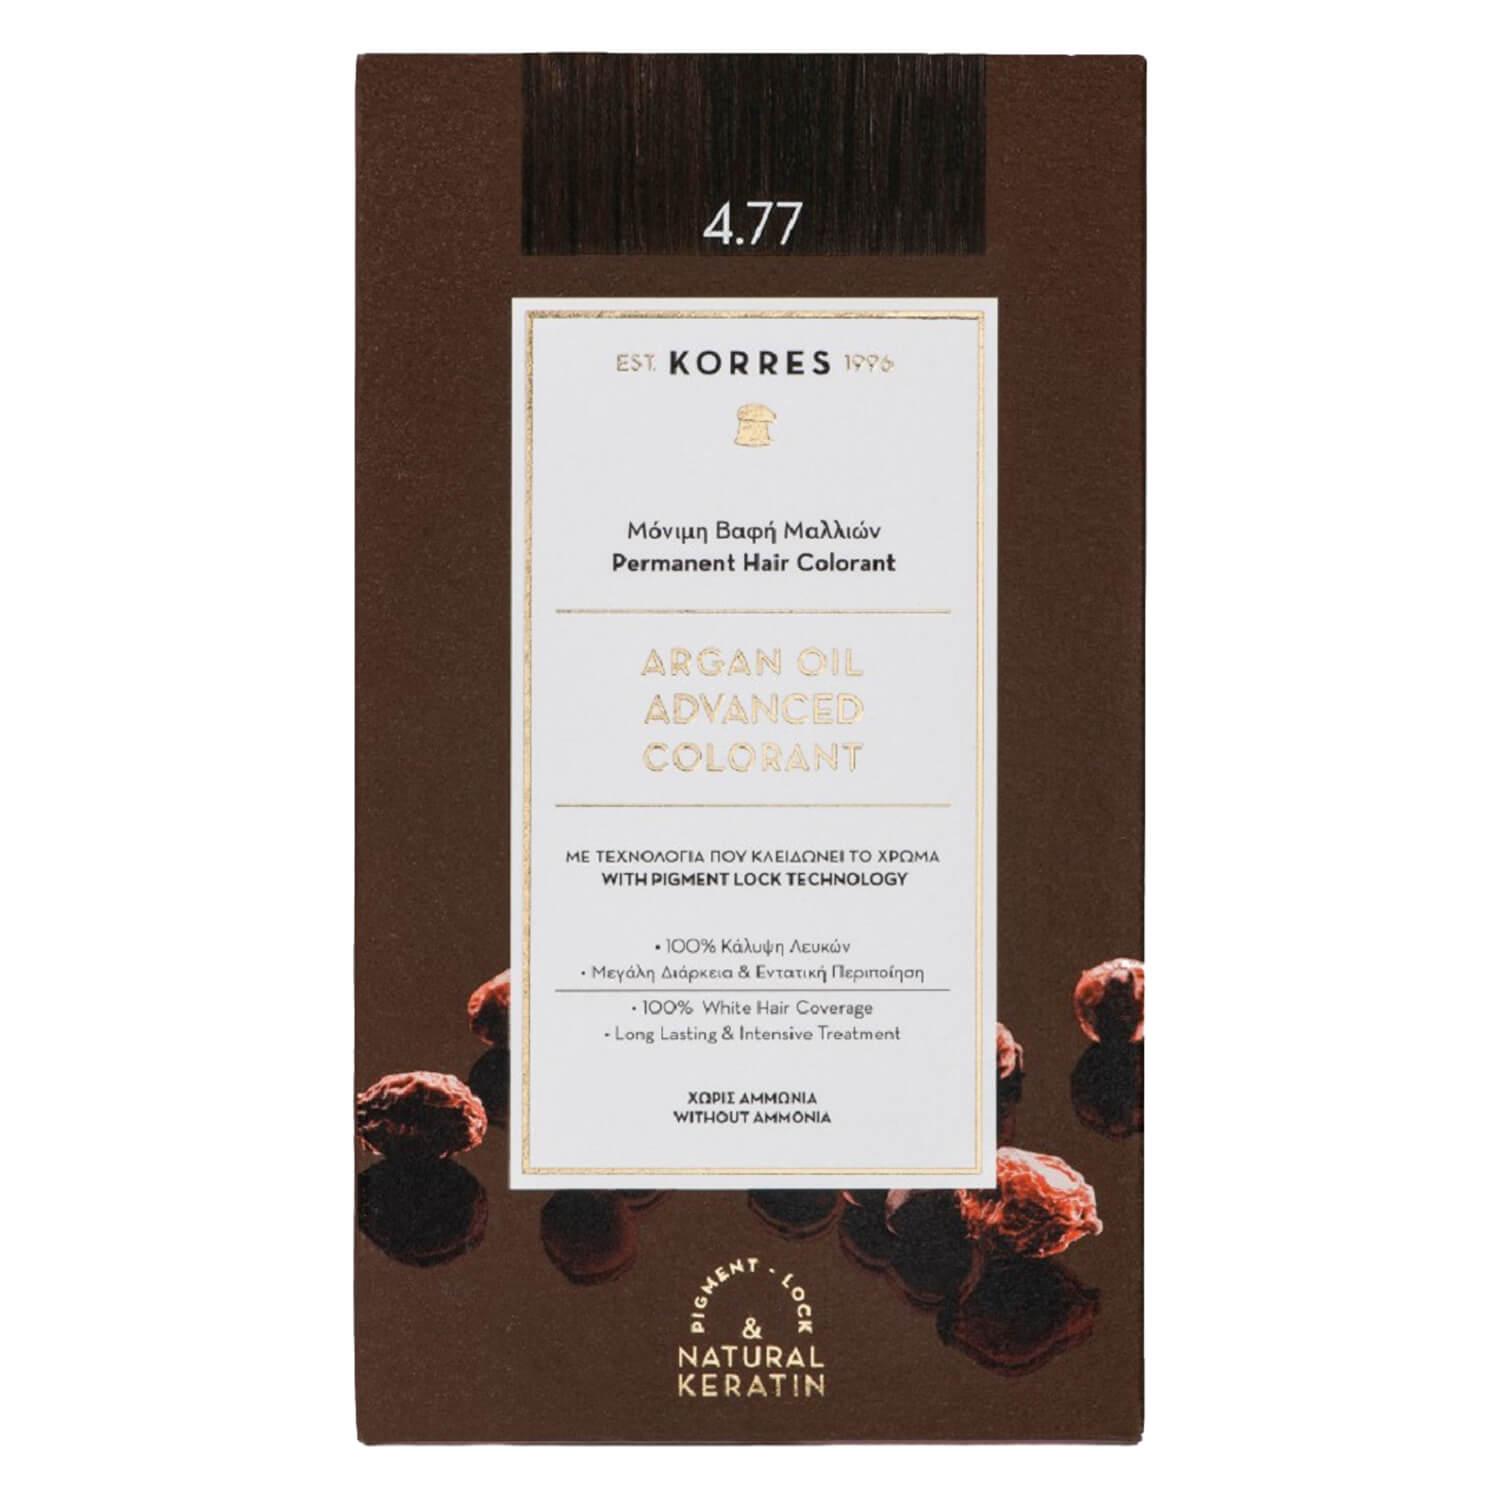 Korres Color - Argan Oil Advanced Hair Colorant Dark Chocolate 4.77